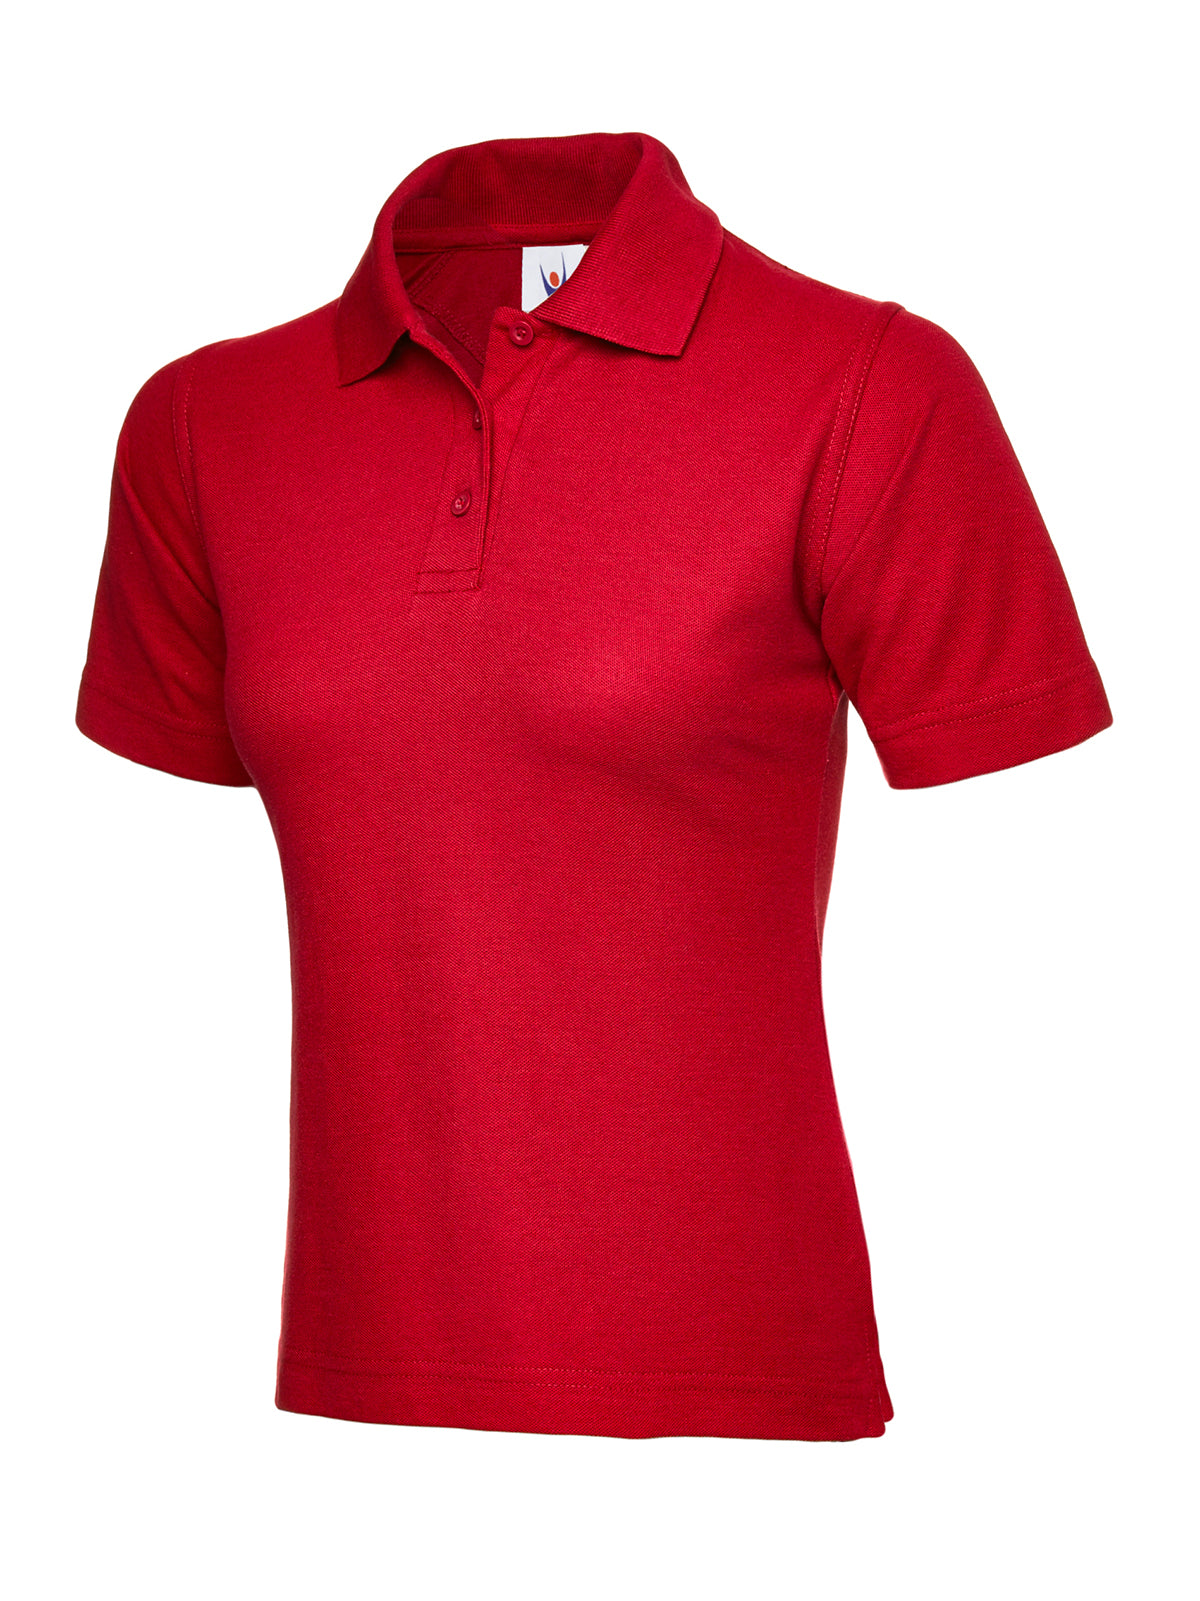 Uneek Ladies Classic Poloshirt - Red